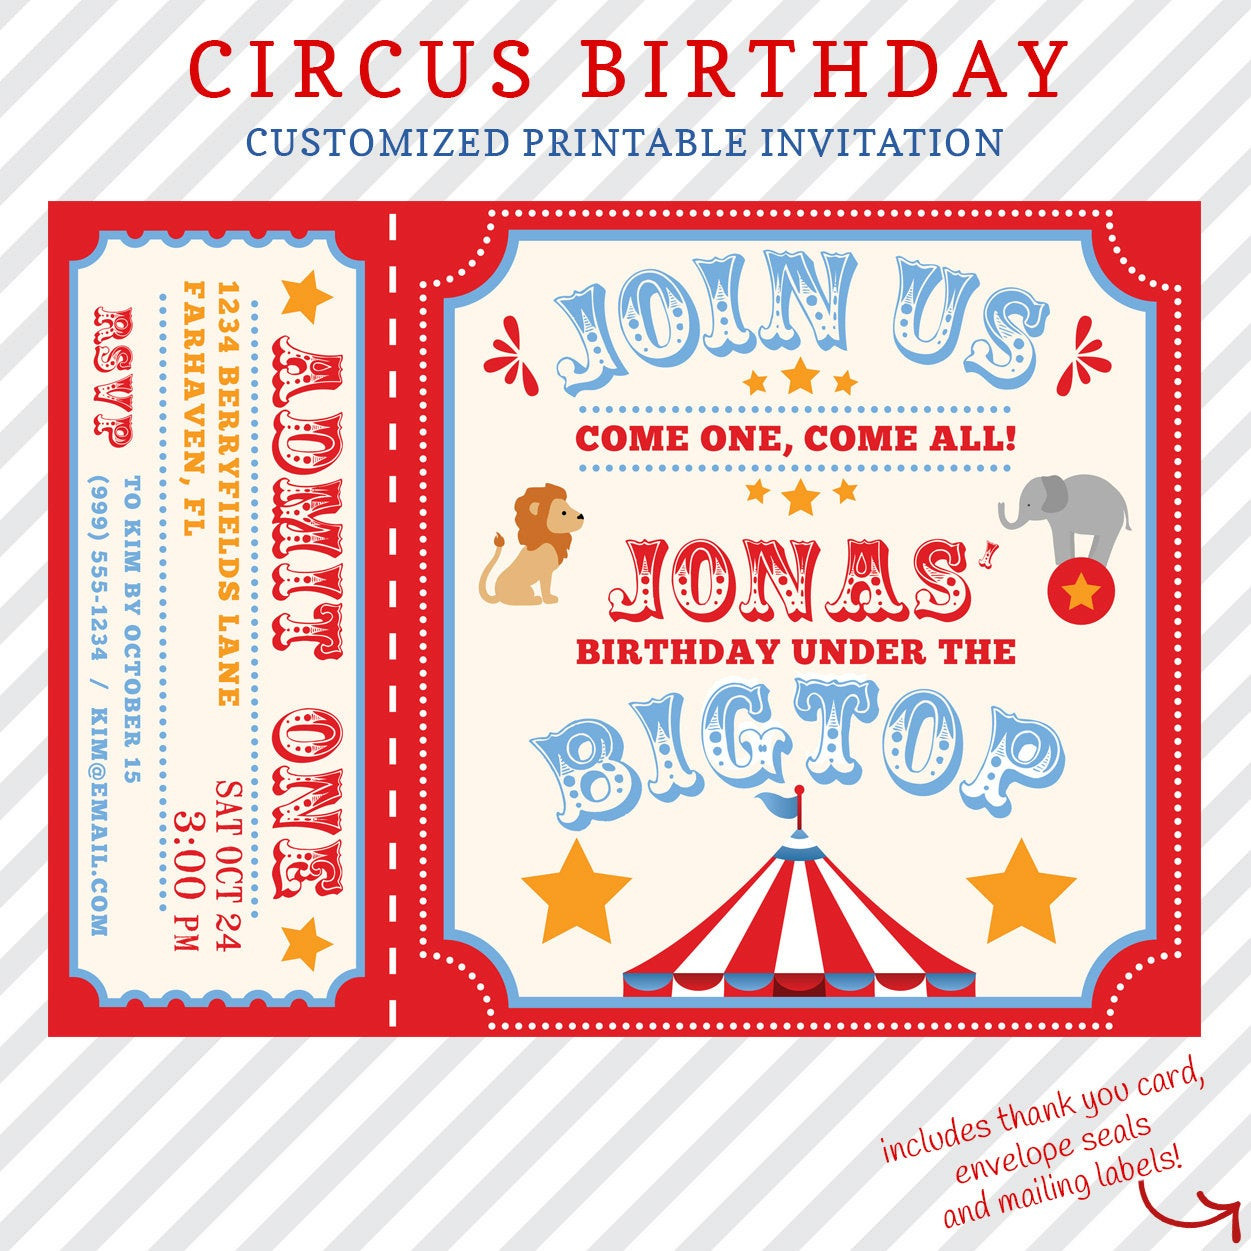 Circus Birthday Party Invitations
 Circus Birthday Invitation Printable custom invitation with